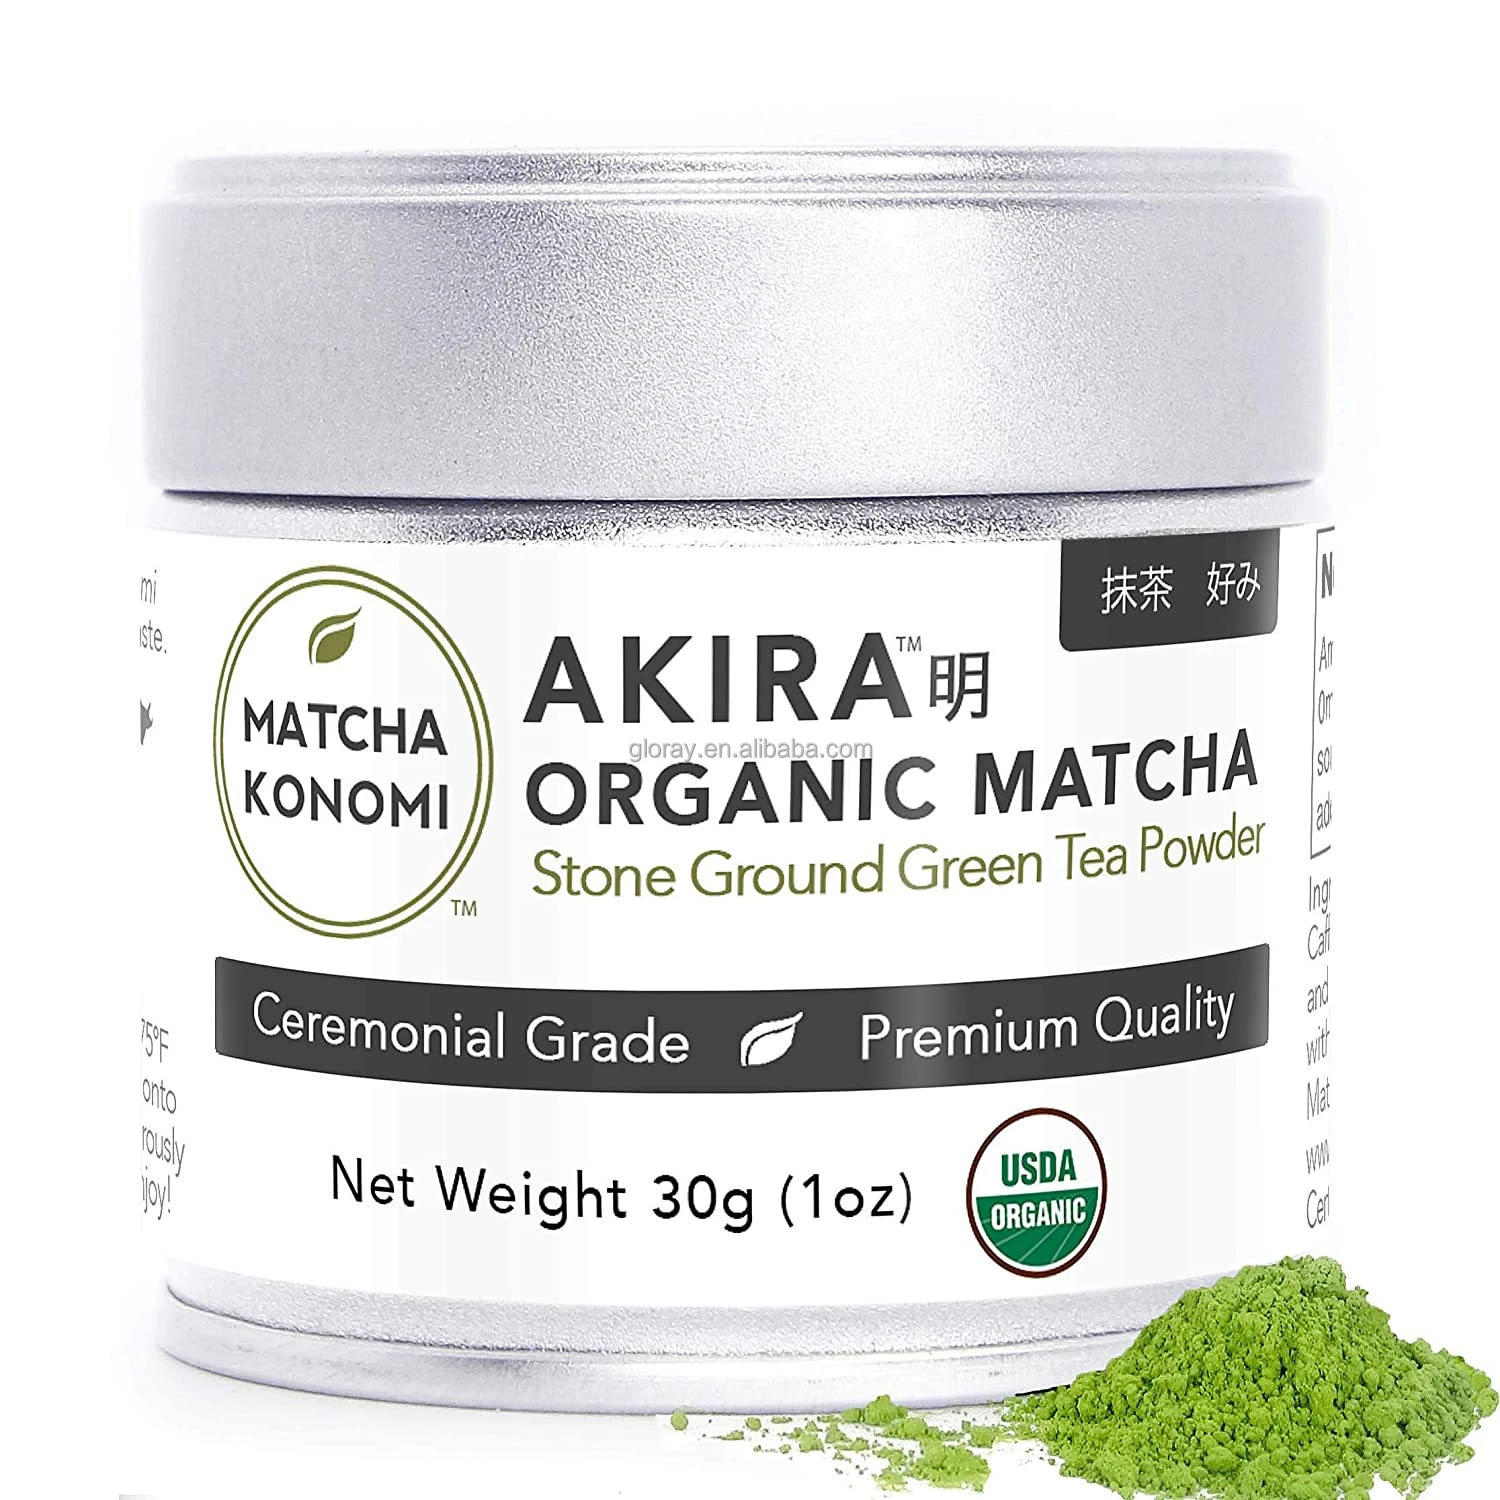 Leaf Tea Organic Matcha Singles Packets Matcha Green Tea Powder 100g per bag